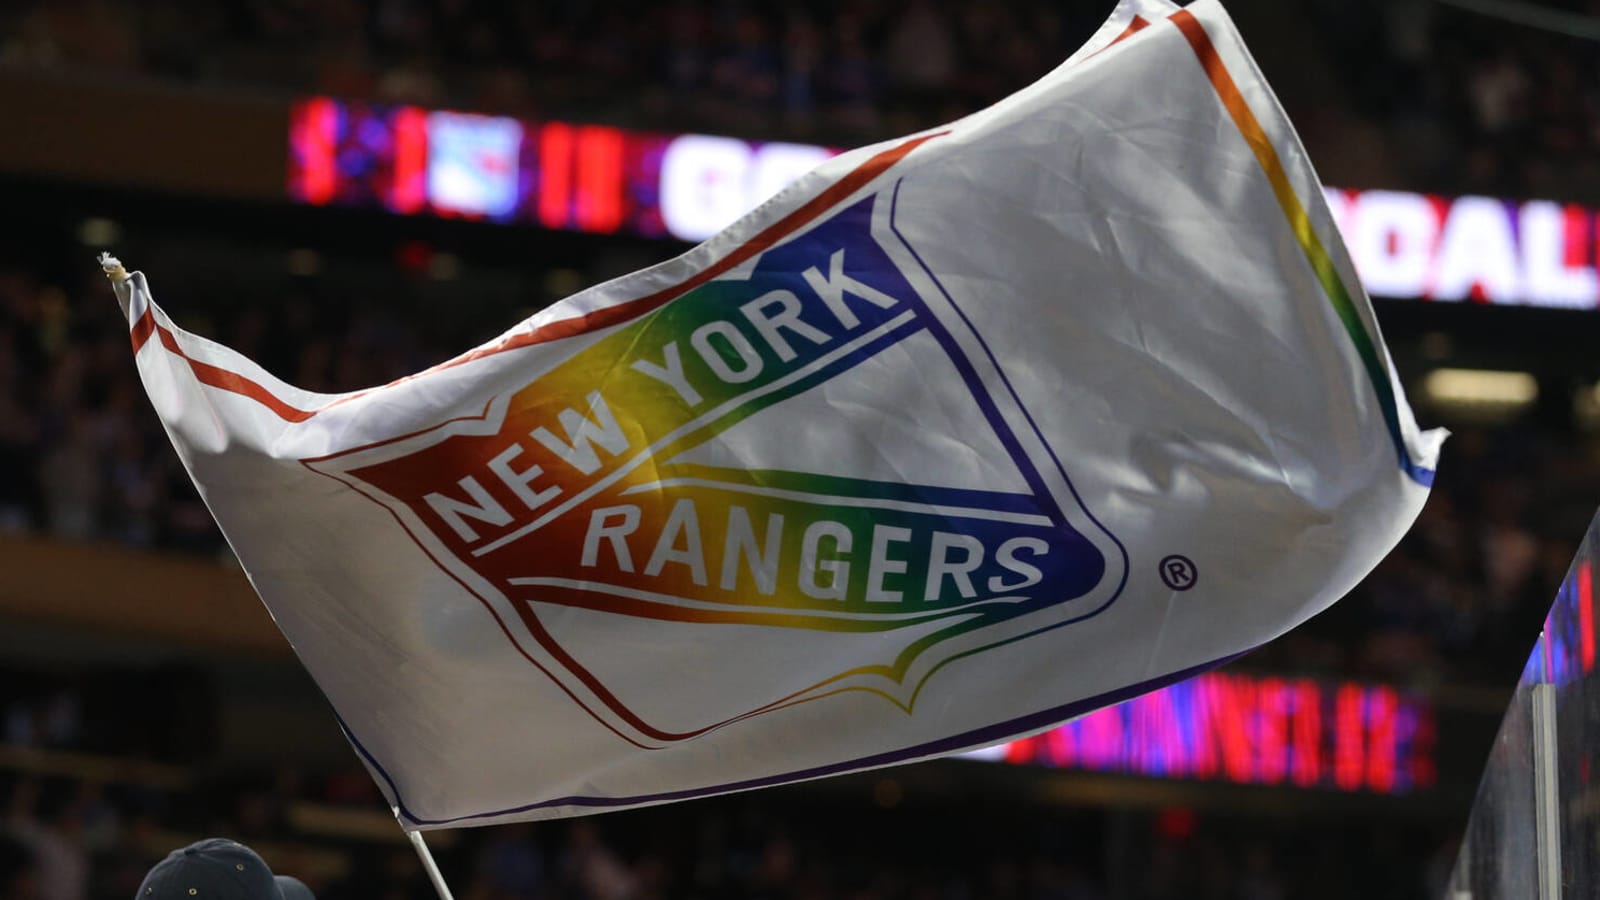 Rangers bail on wearing Pride Night jerseys at last minute